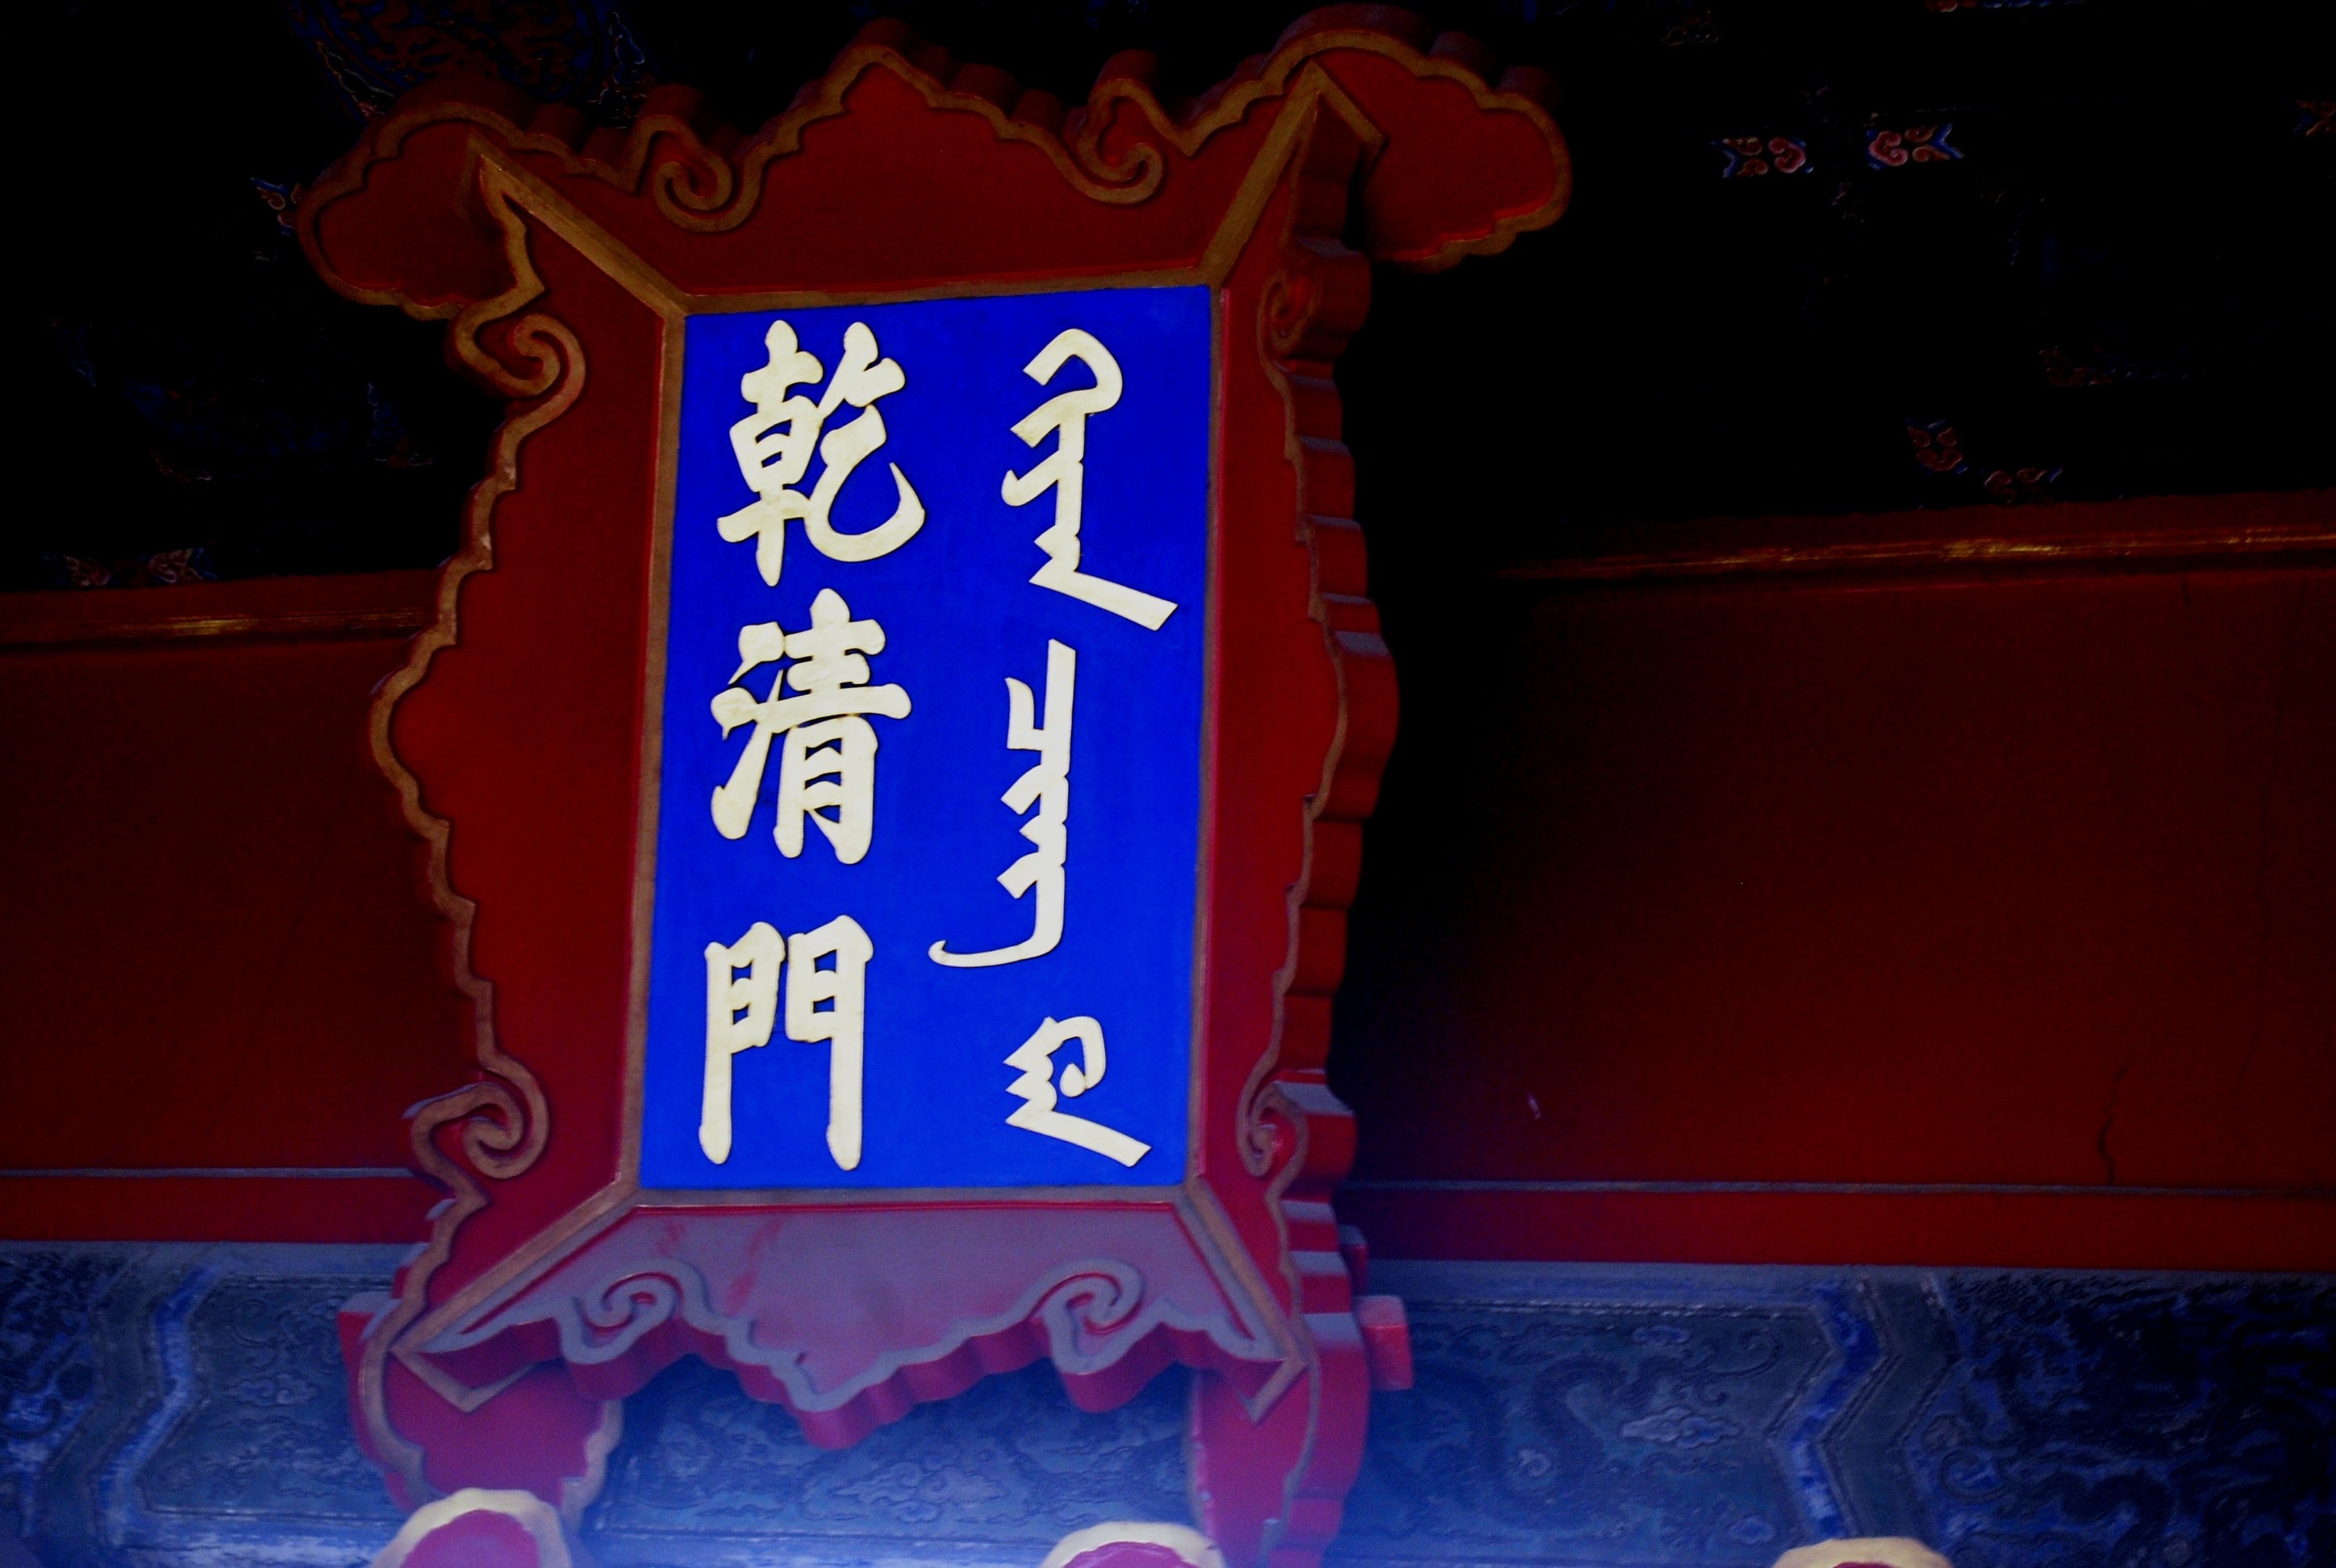 kanji texted signage